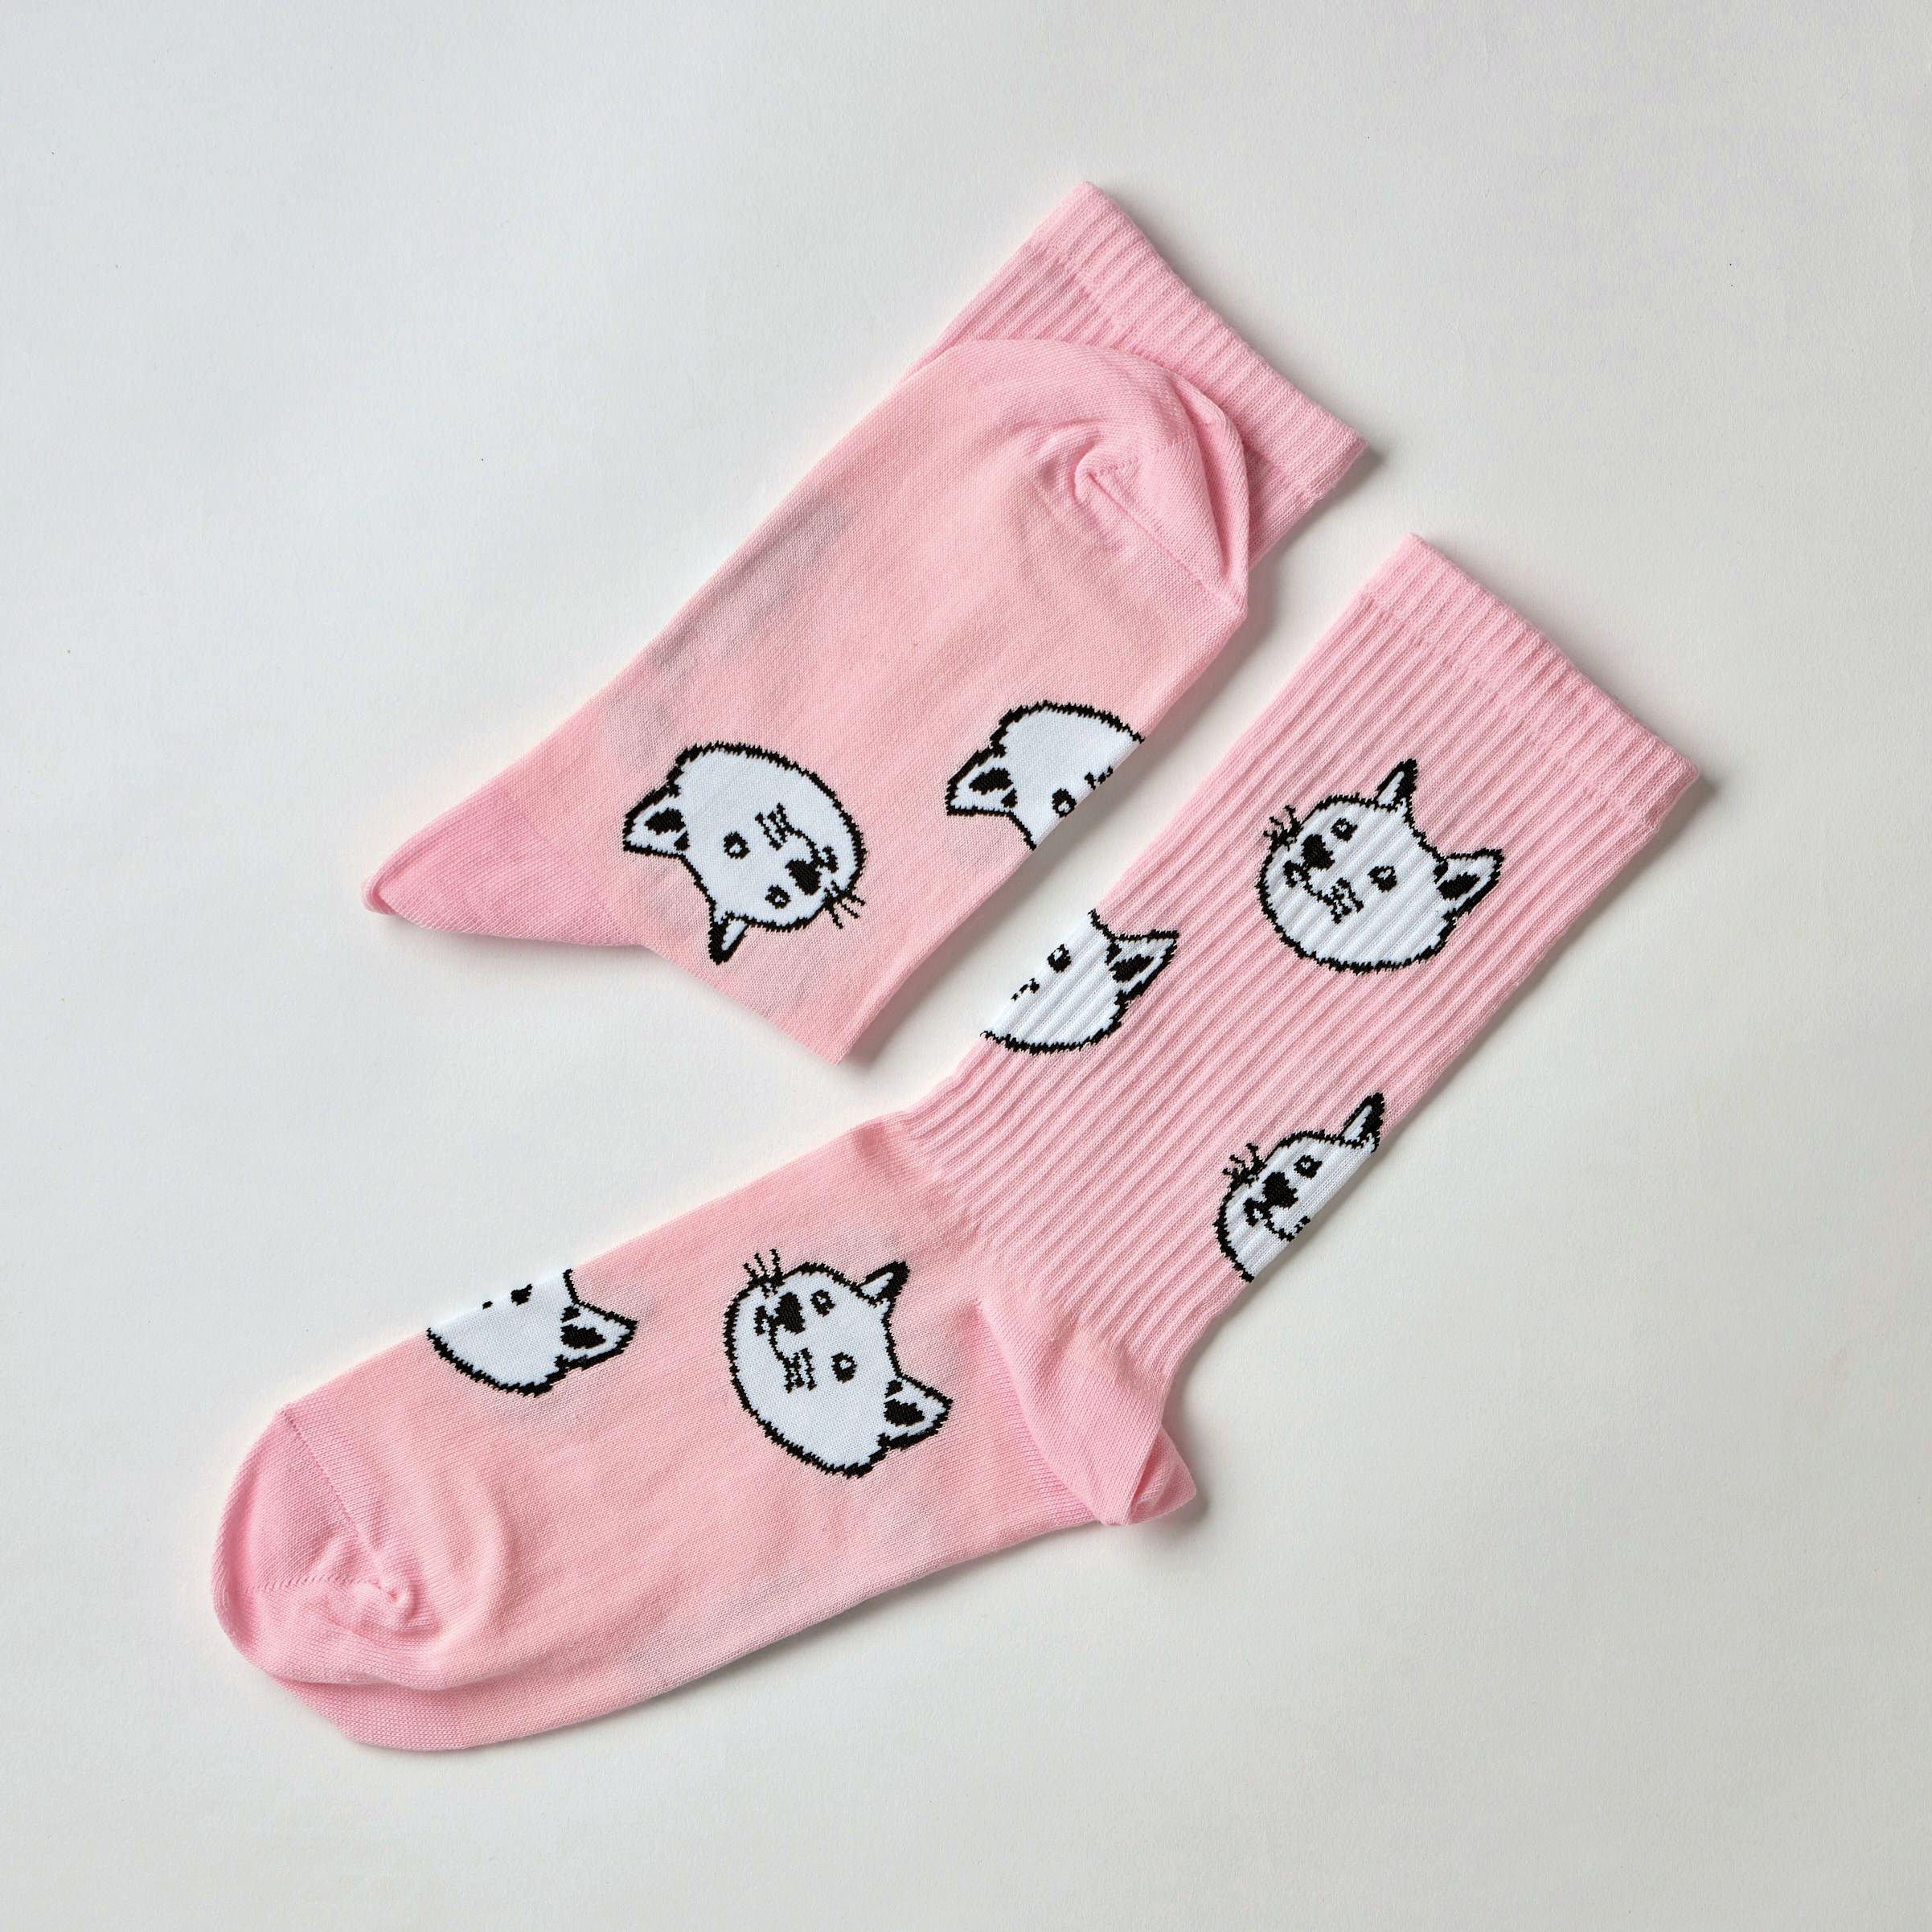 Носки женские St. Friday Socks 695-13 розовые 42-46